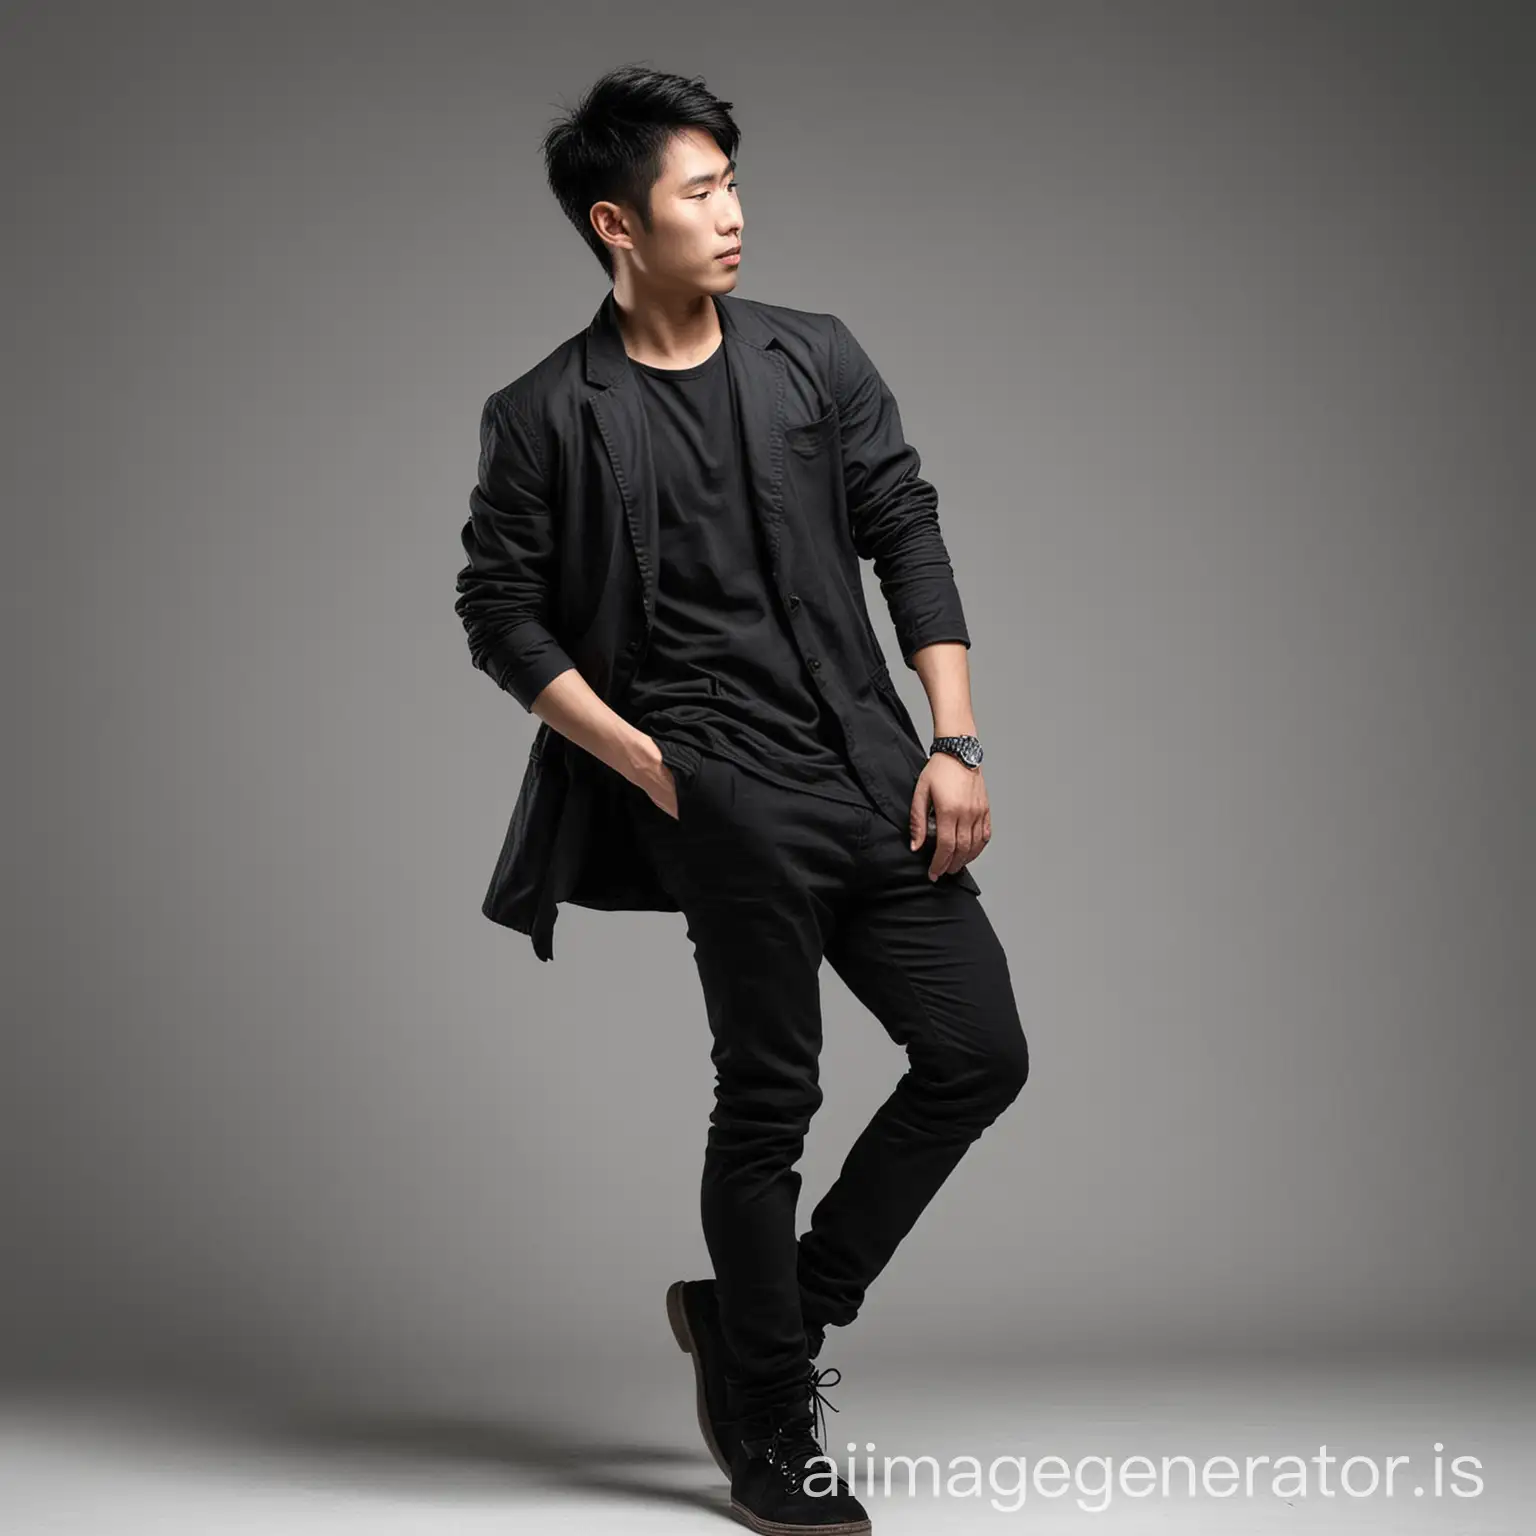 Asian male portrait white background dark clothing full body side profile hand movement